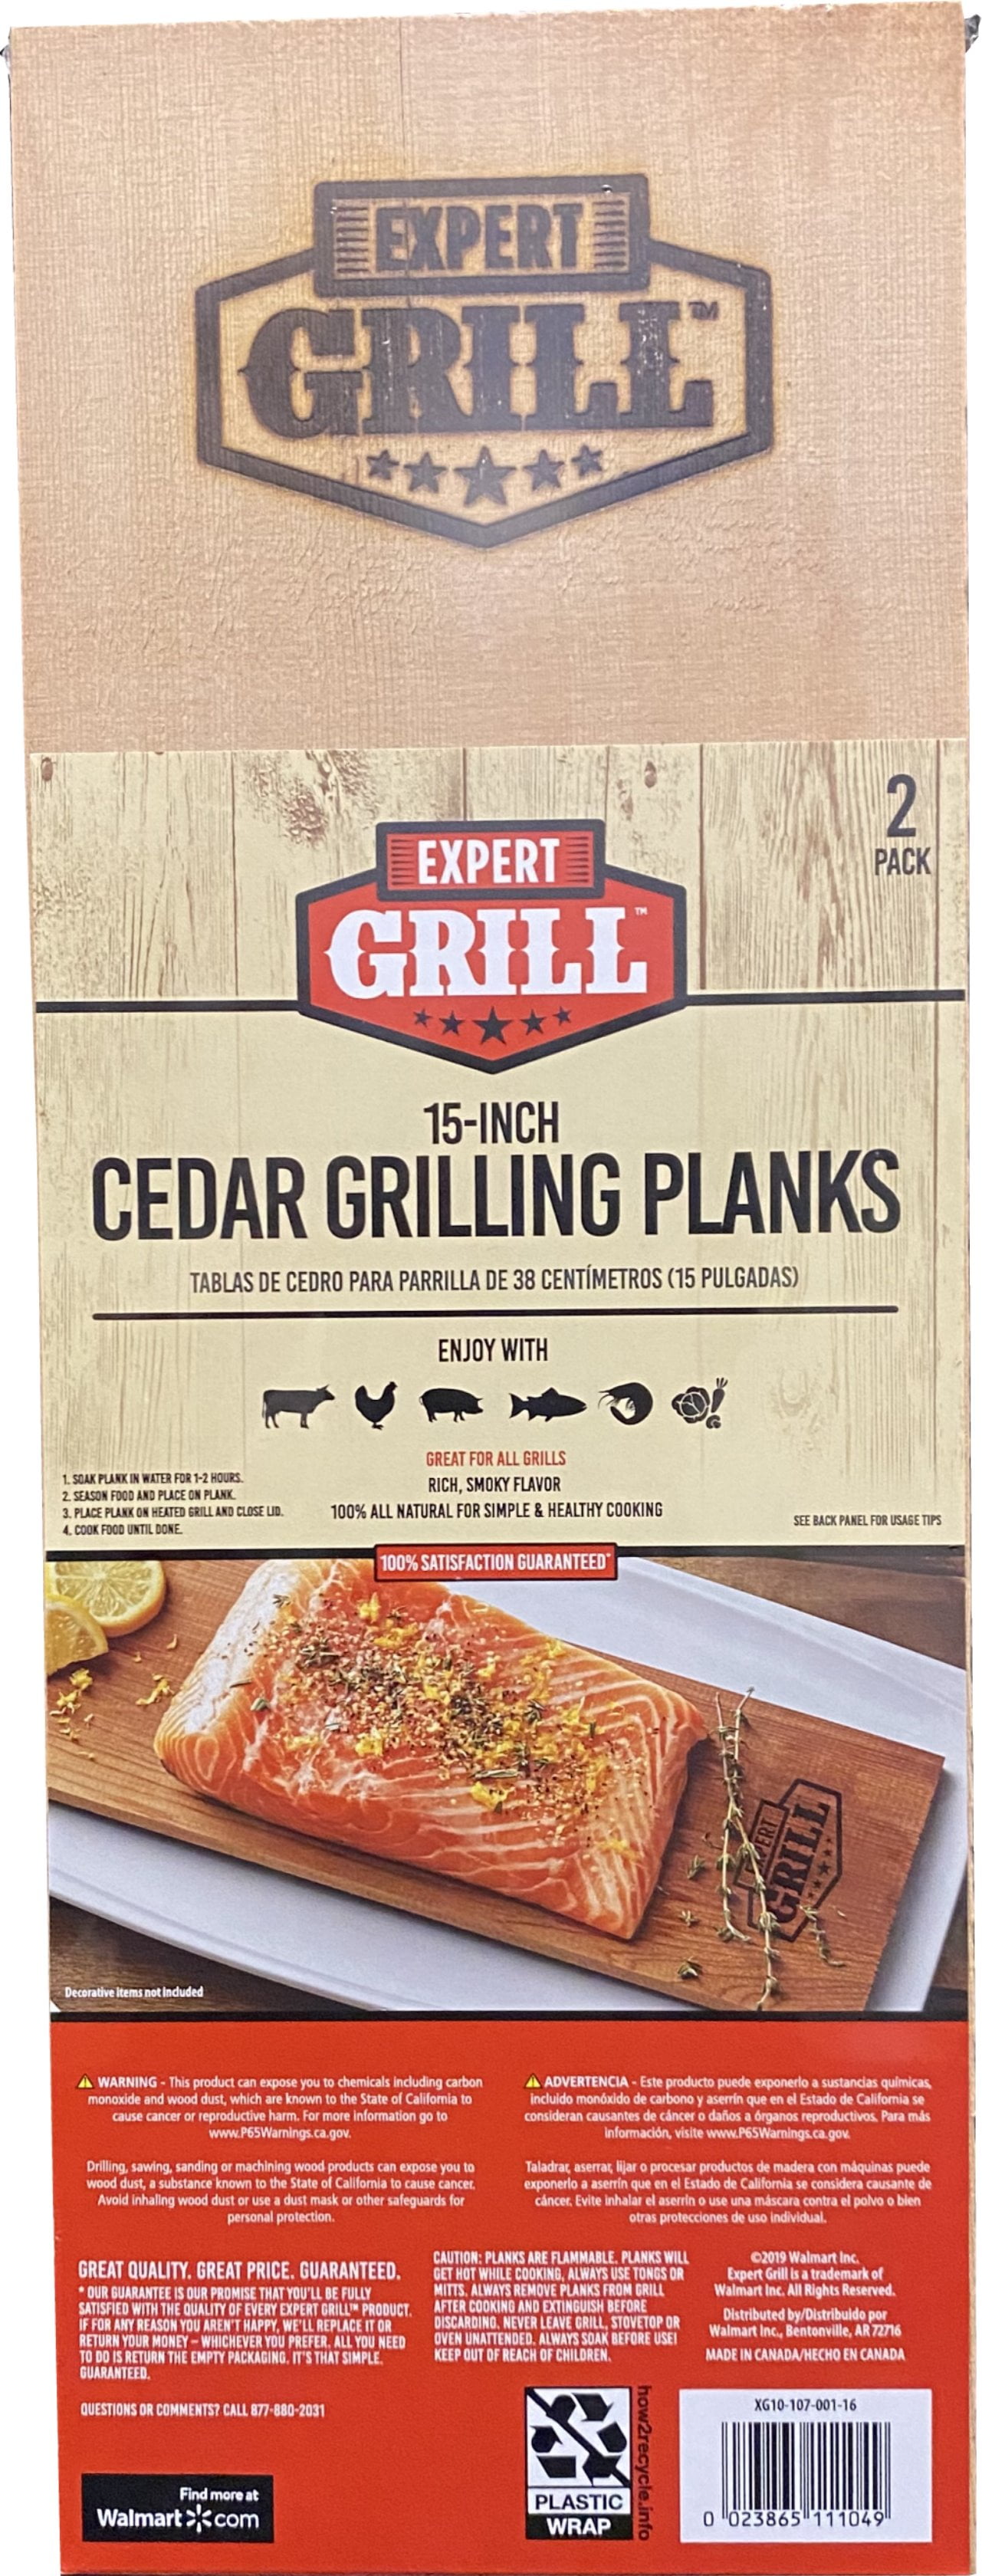 5 x 11 3/4 RCK Sales Solid American Cedar Grilling Smoking Planks Four Pack 4 